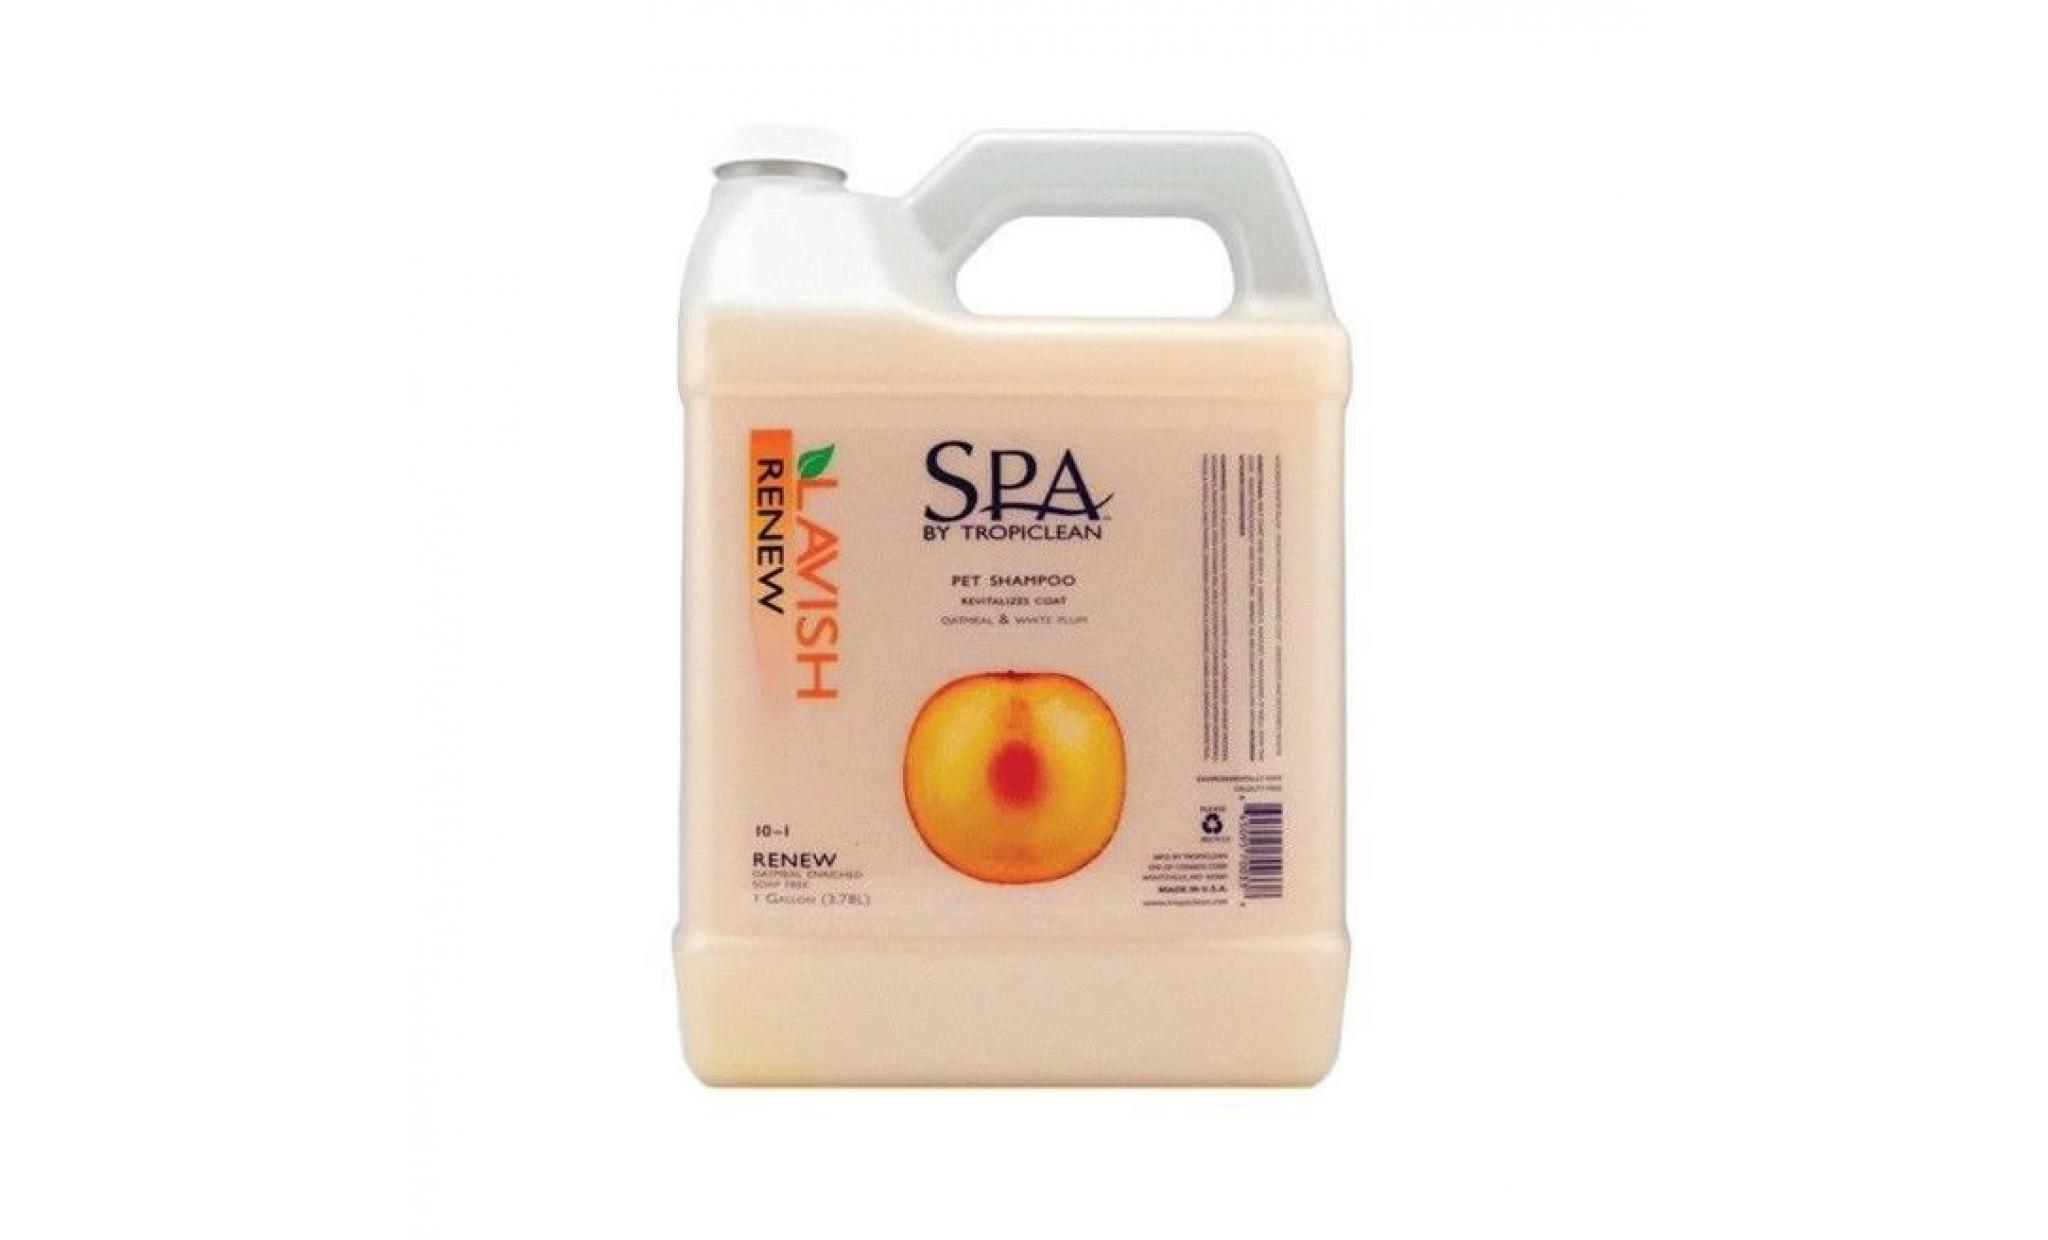 spa dog rejuvinating shampoo gallon lavish all natural   choose from 4 scents (renew) 1pehuo